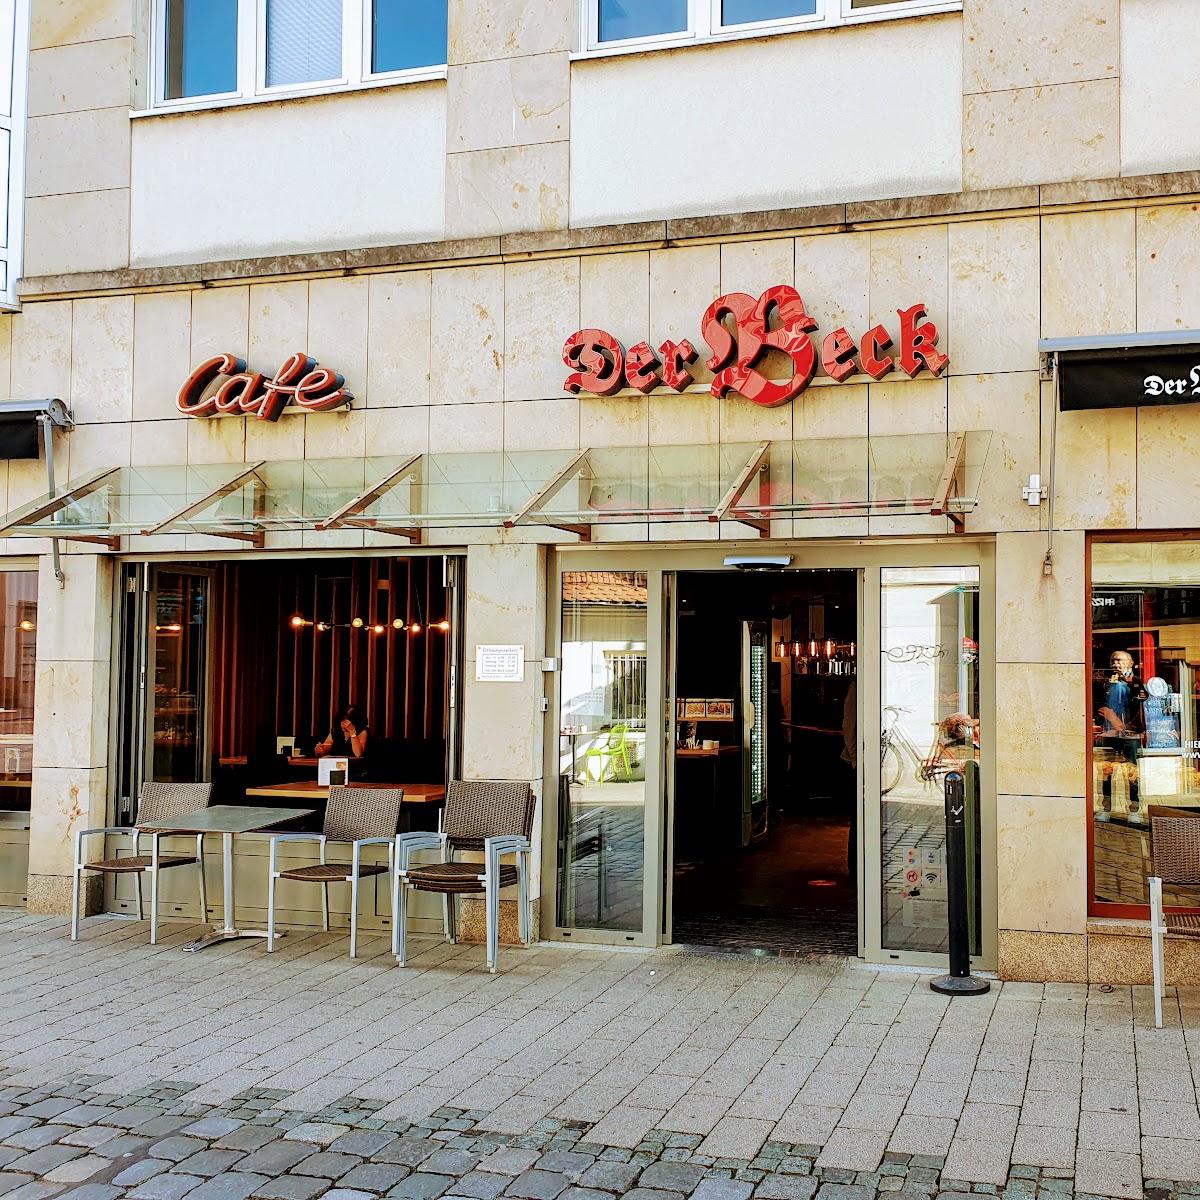 Restaurant "Der Beck" in Bamberg